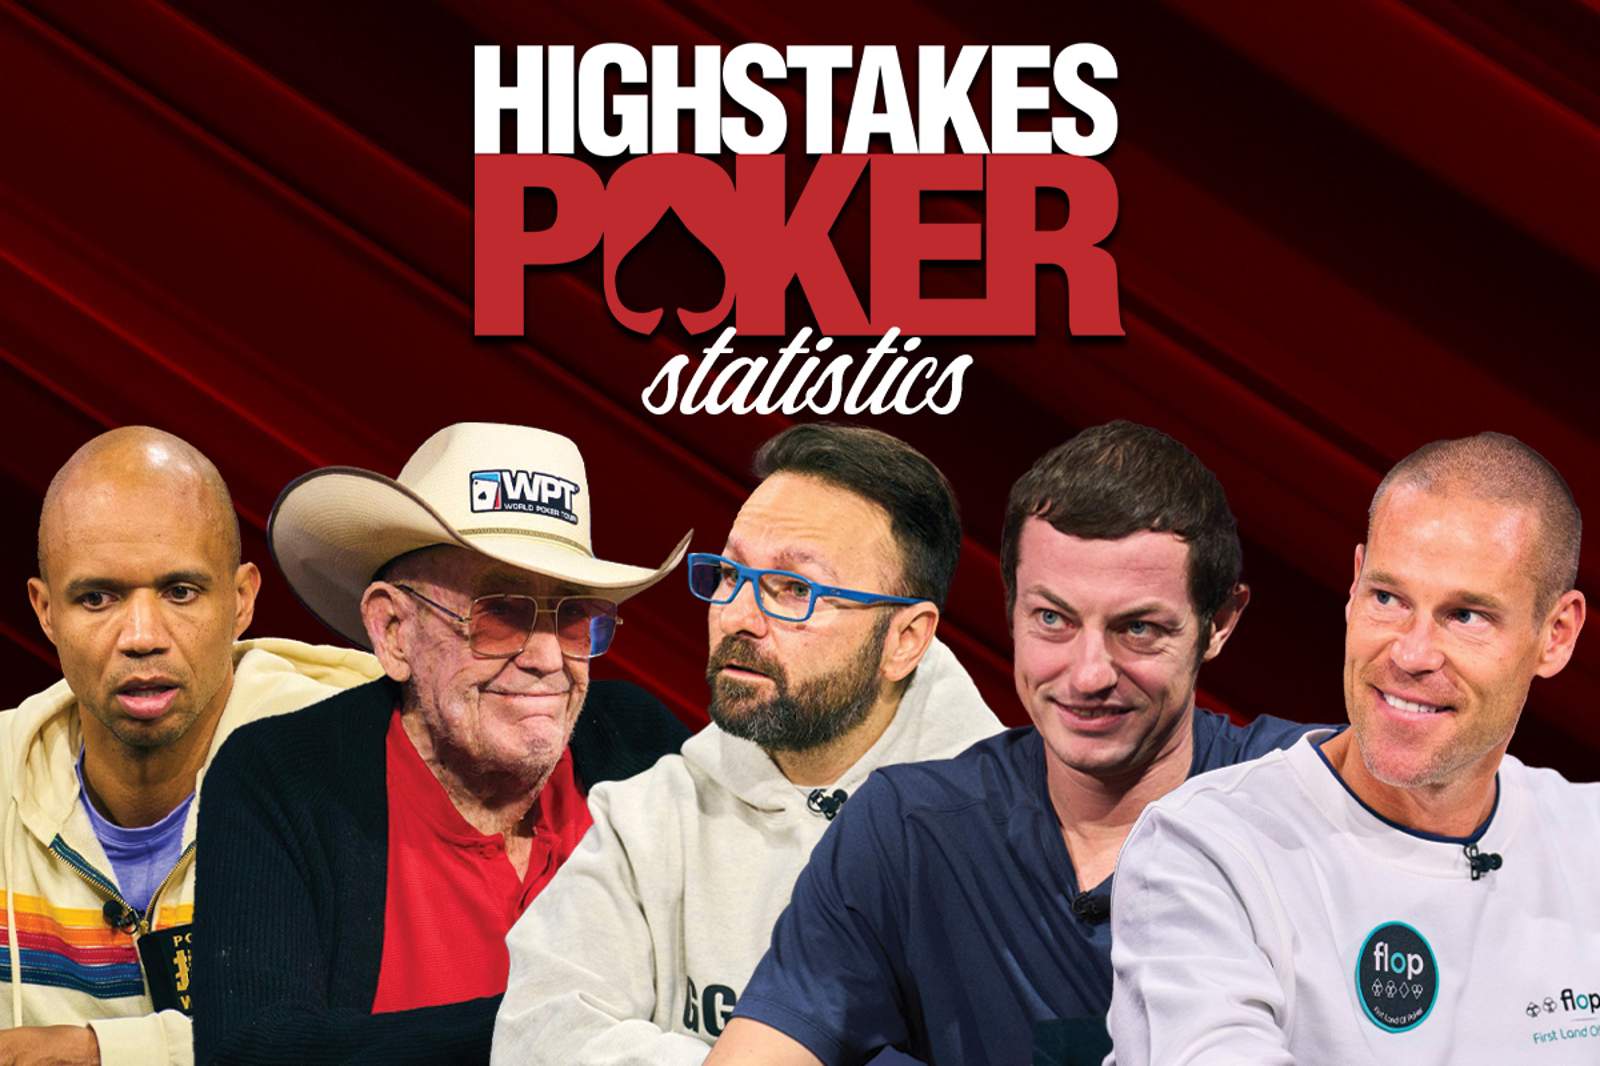 High Stakes Poker Statistics Heading into Season 9